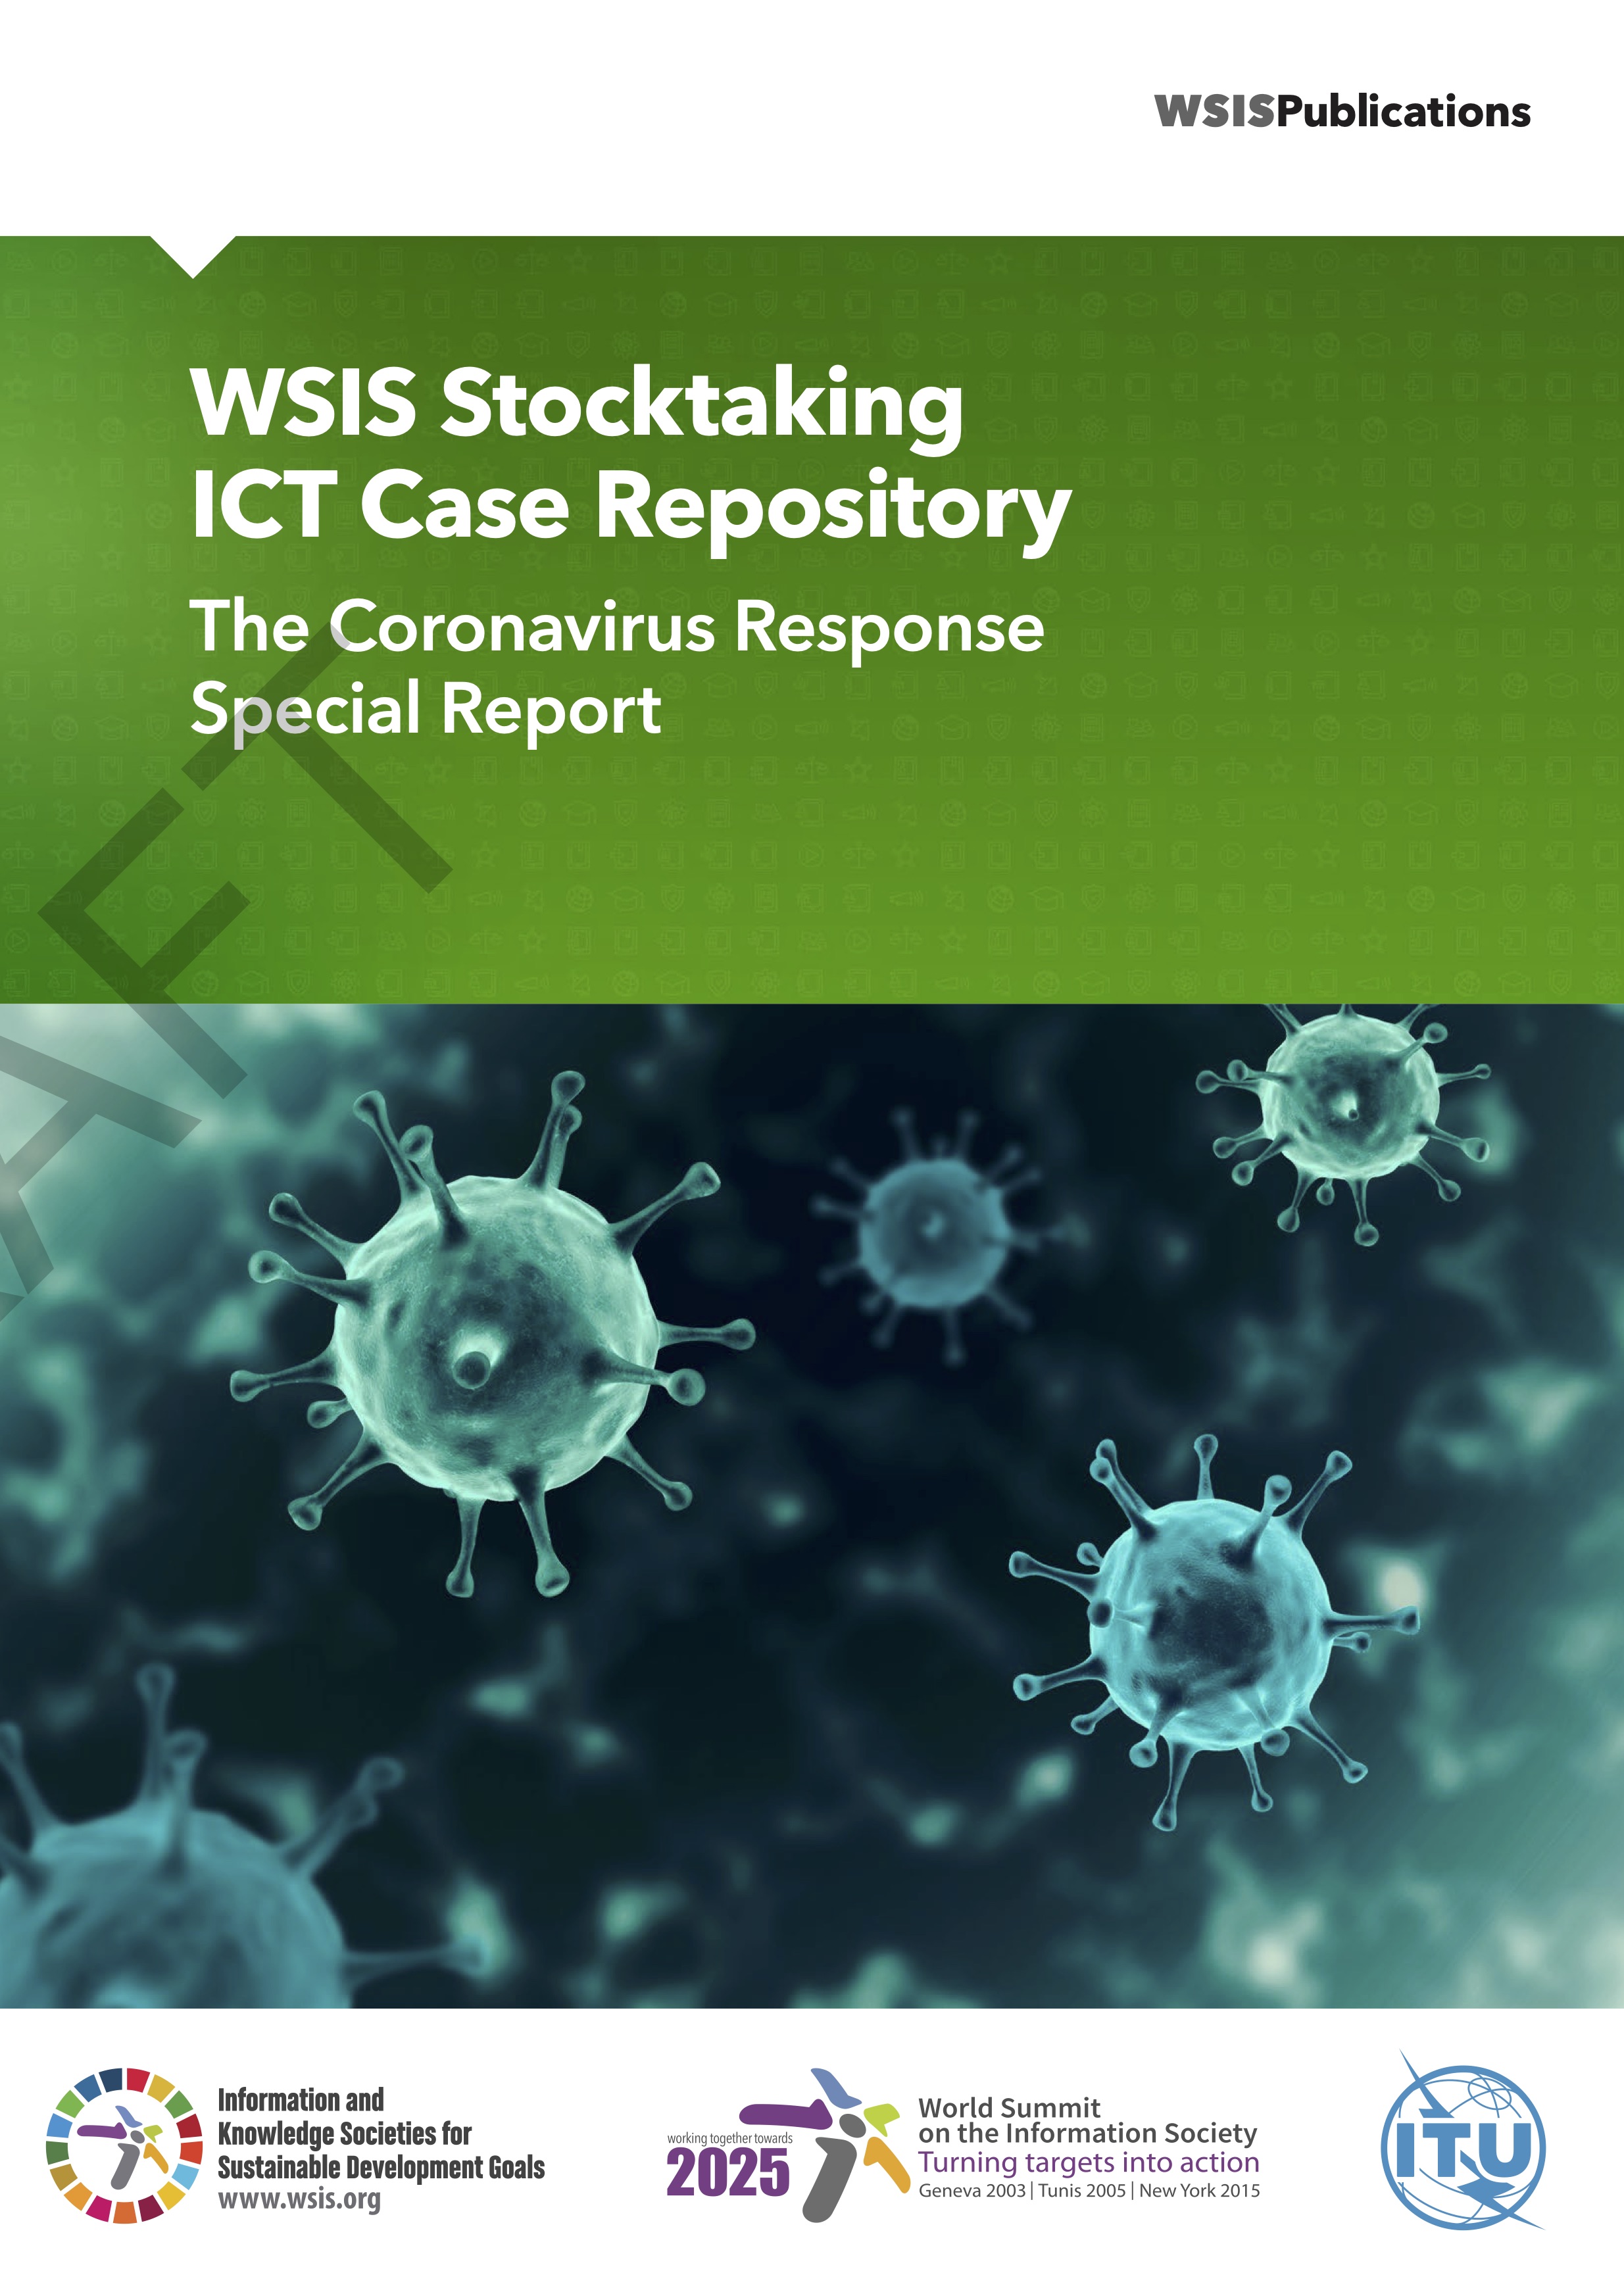 WSIS Stocktaking ICT Case Repository: The Coronavirus Response Special Report